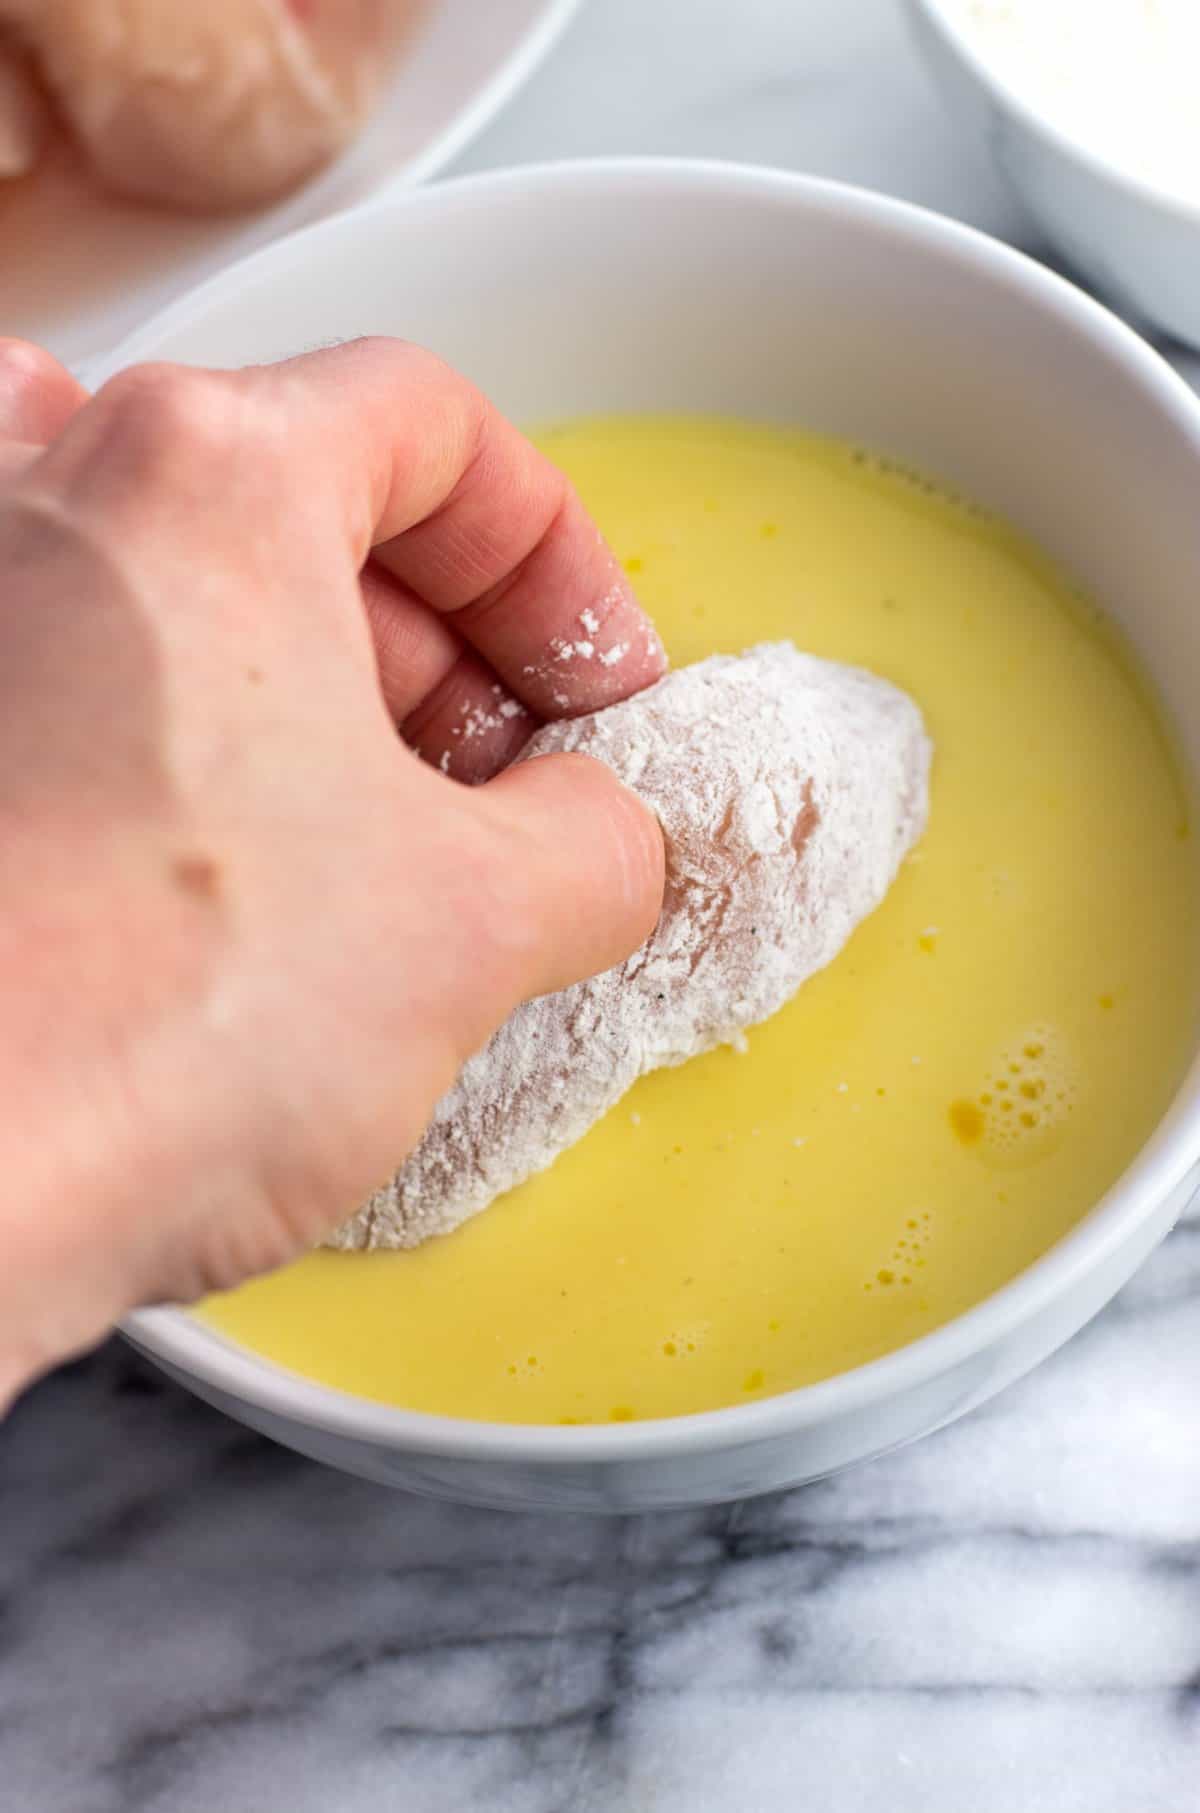 A hand dipping a flour dredged tender in egg.